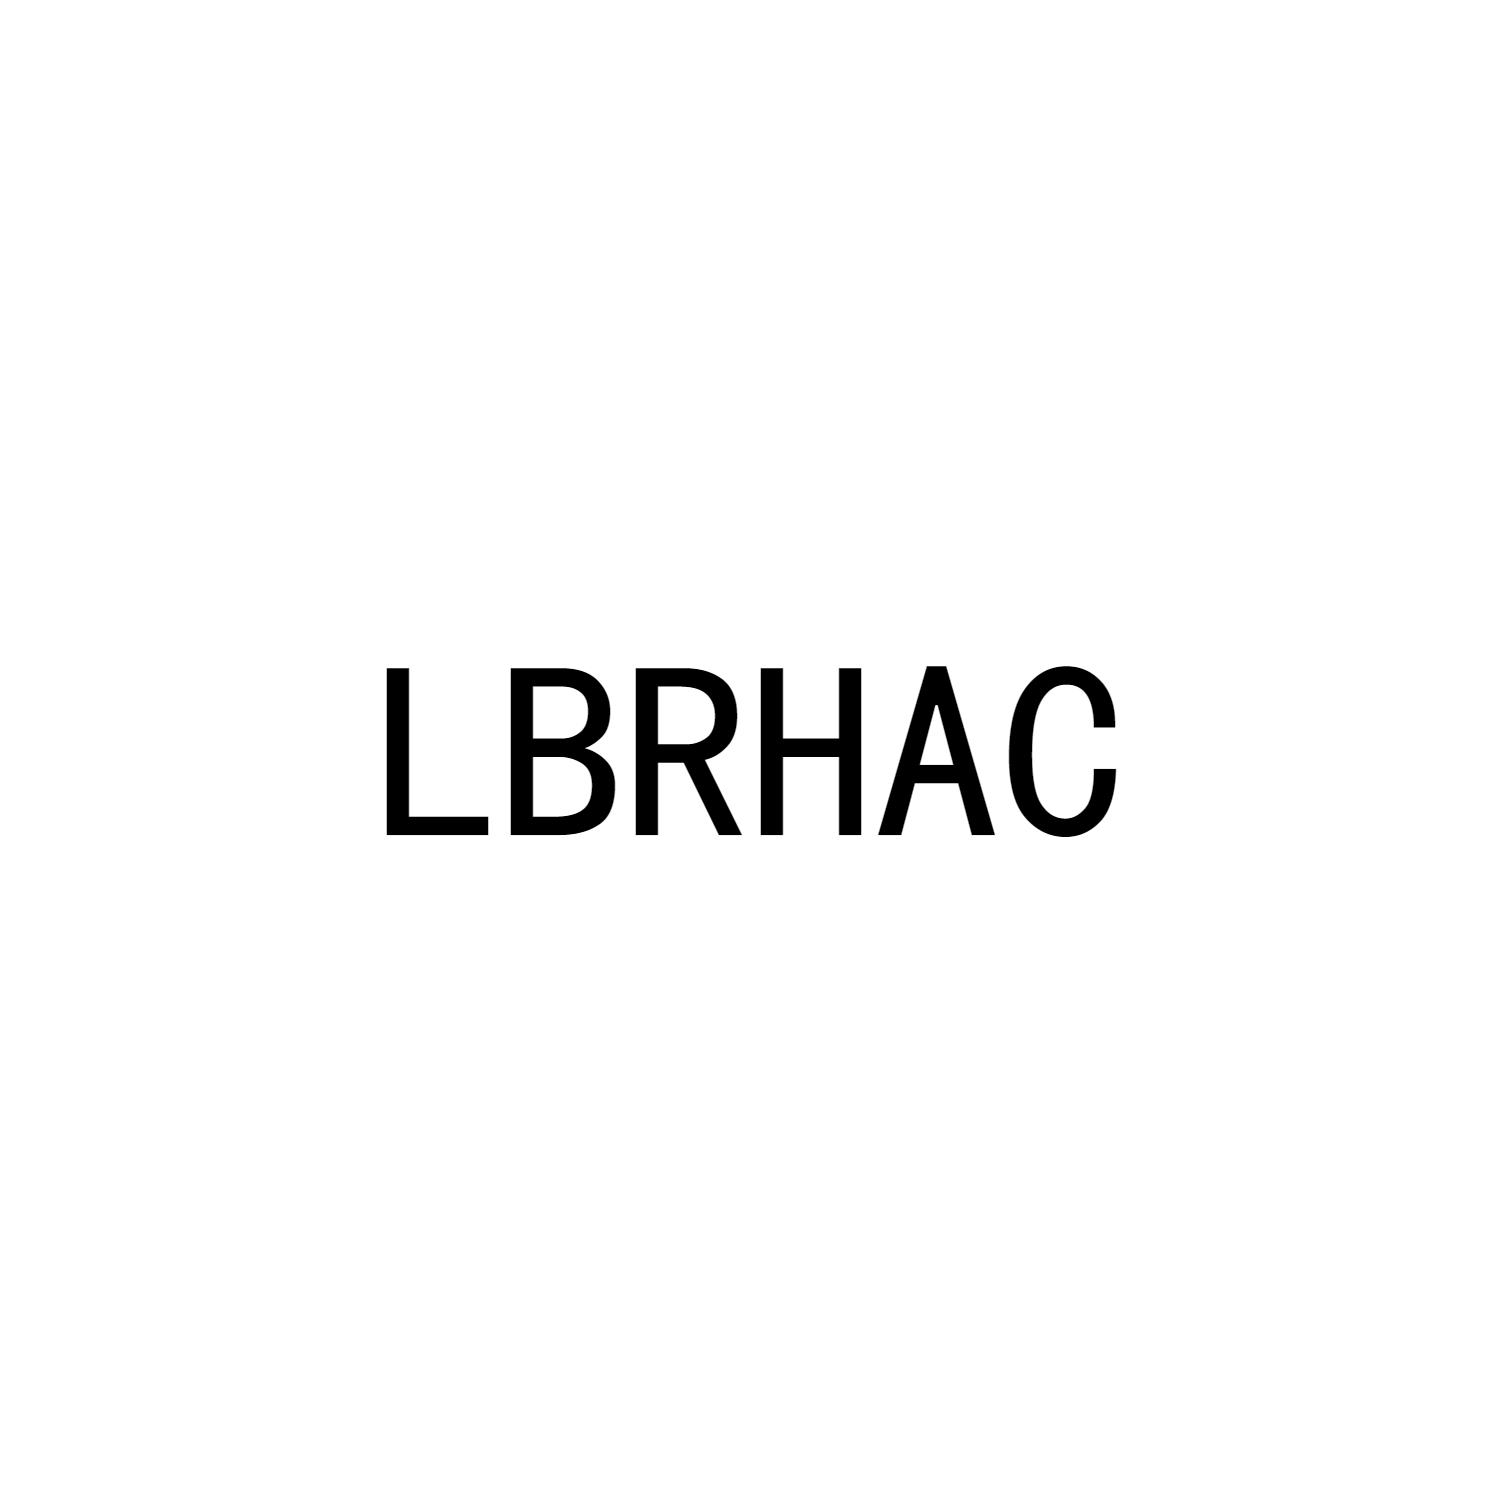 LBRHAC